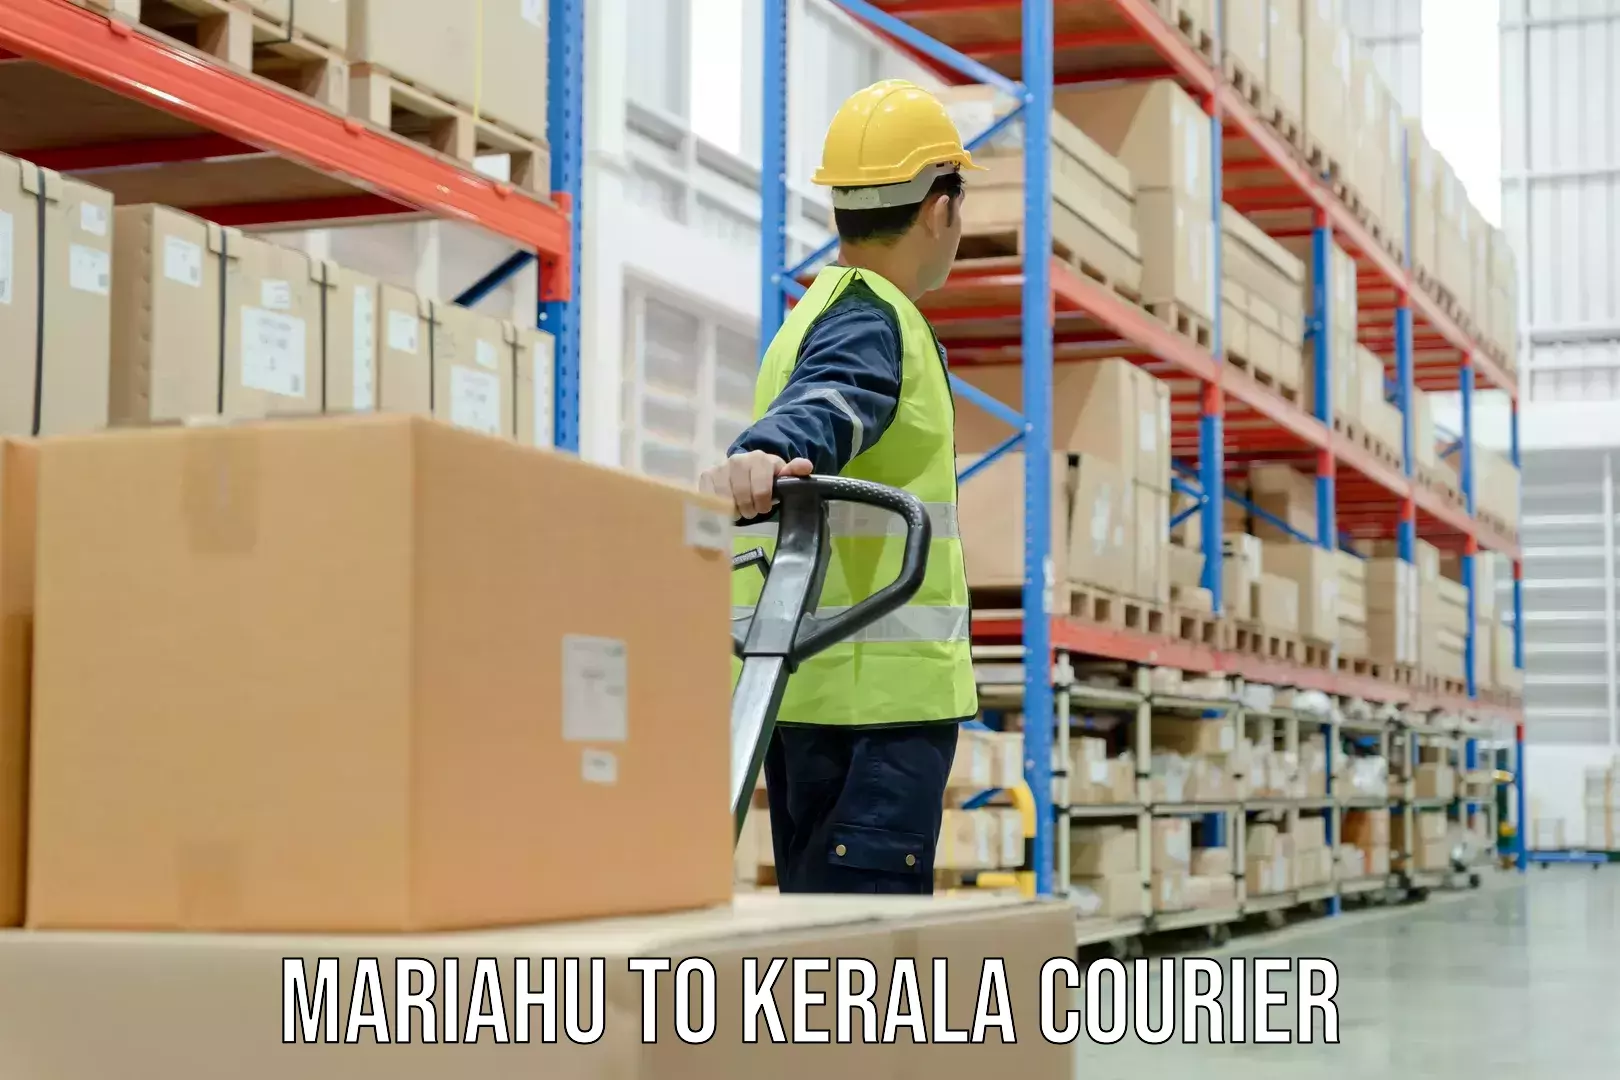 Express postal services Mariahu to Kerala